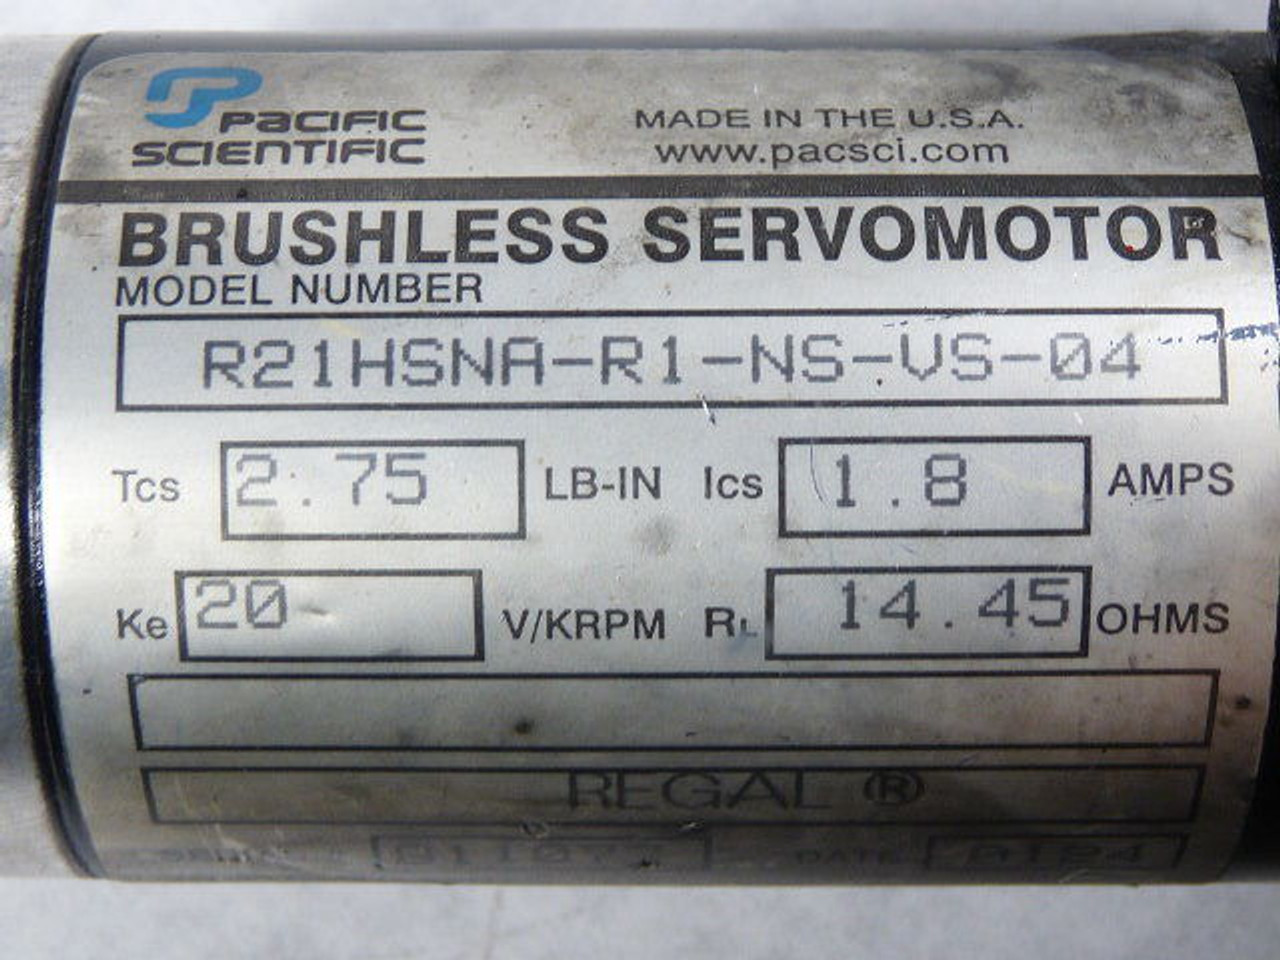 Pacific Scientific R21HSNA-R1-NS-VS-04 Brushless Servo Motor 20V/KRPM USED